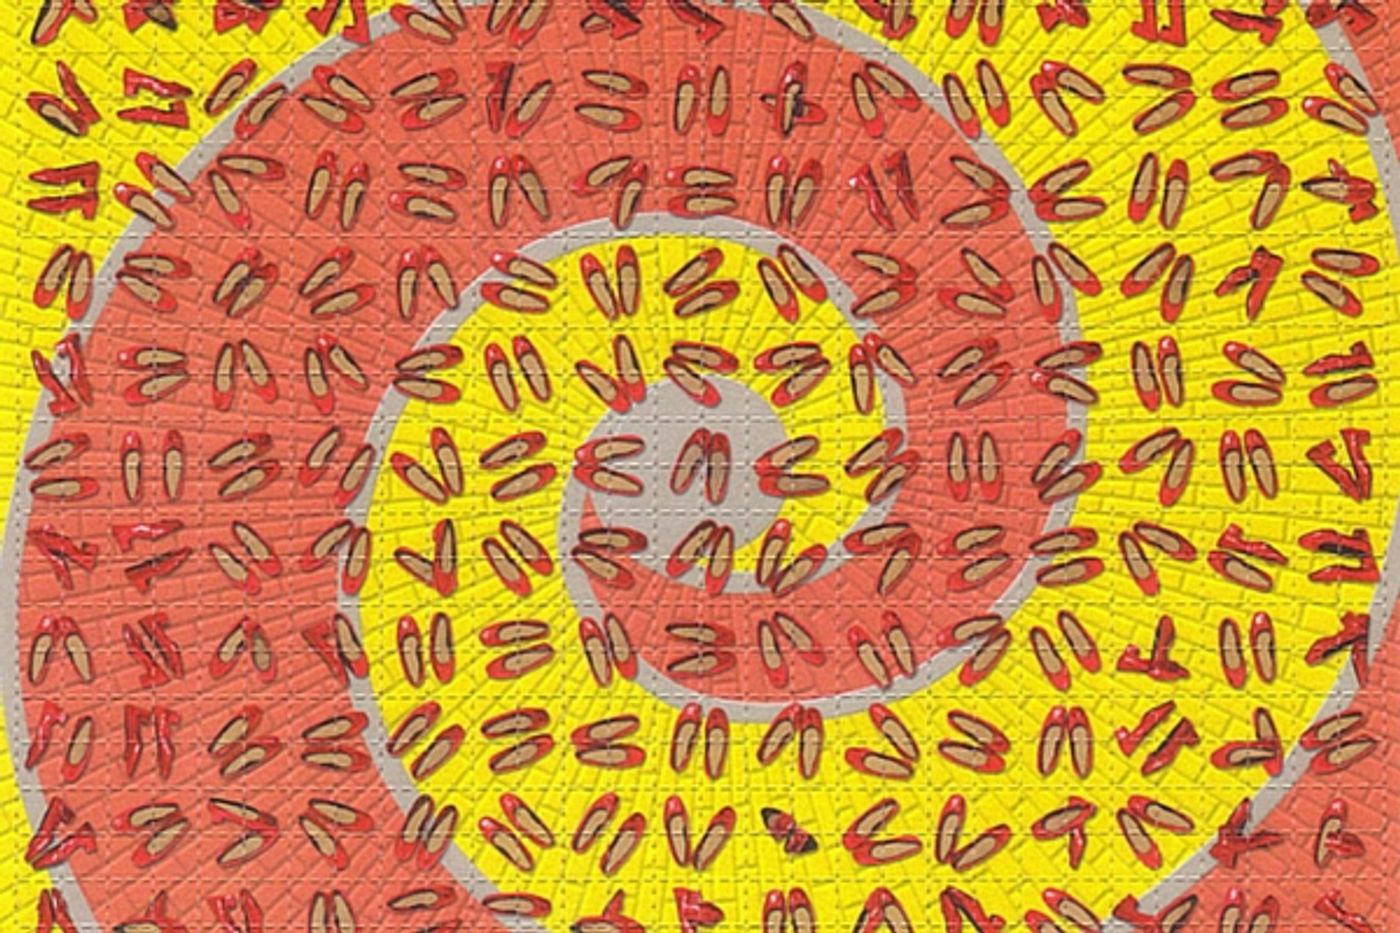 High tech brain imaging reveals how LSD works in the brain